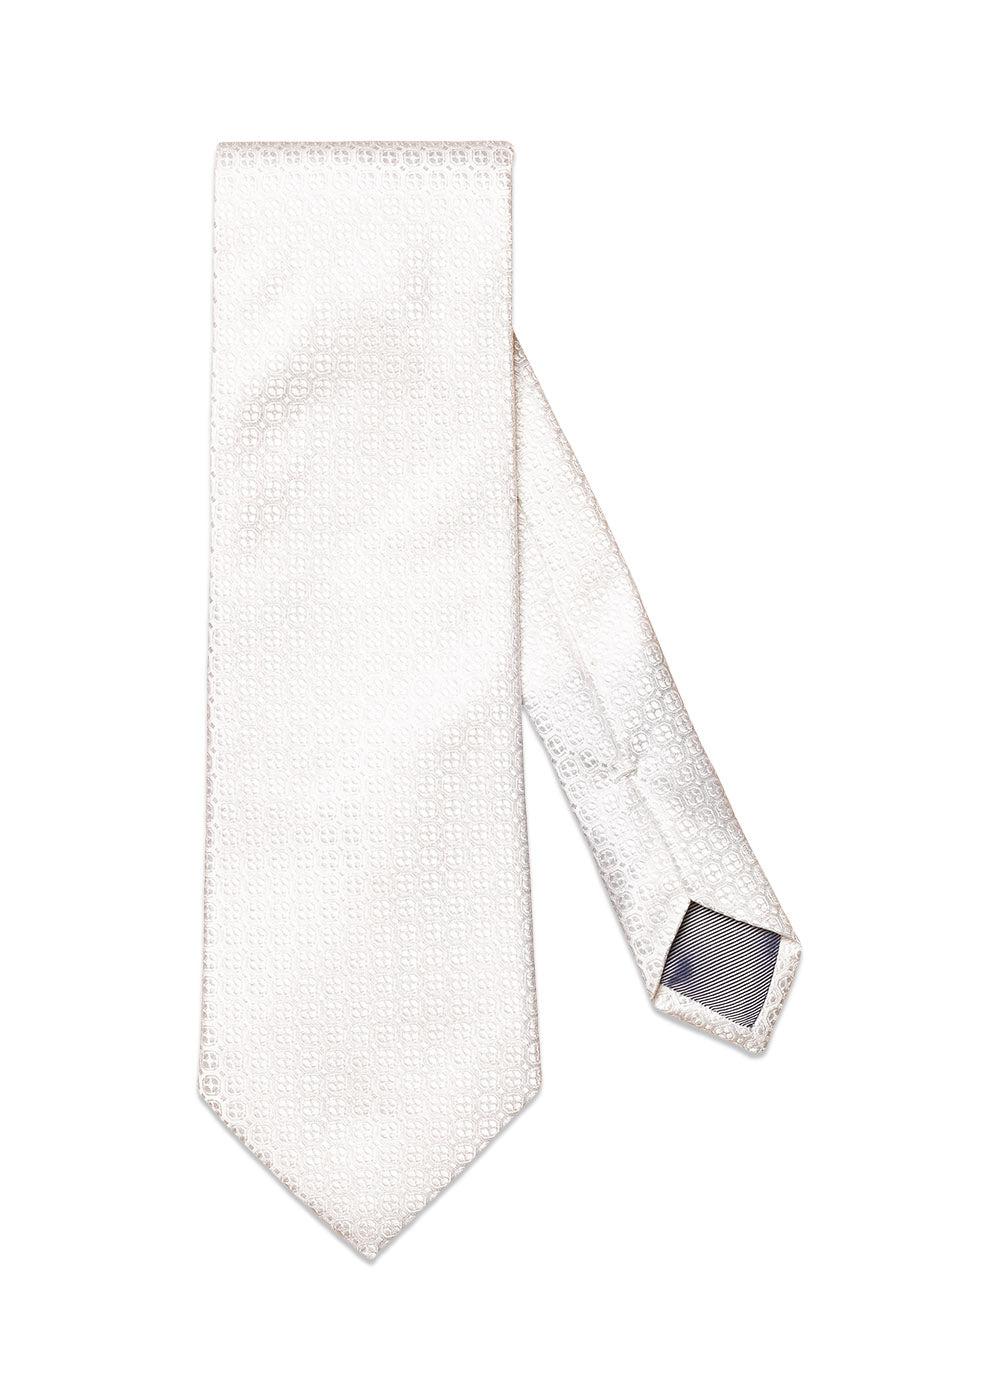 Etons Tie - White. Køb accessories her.